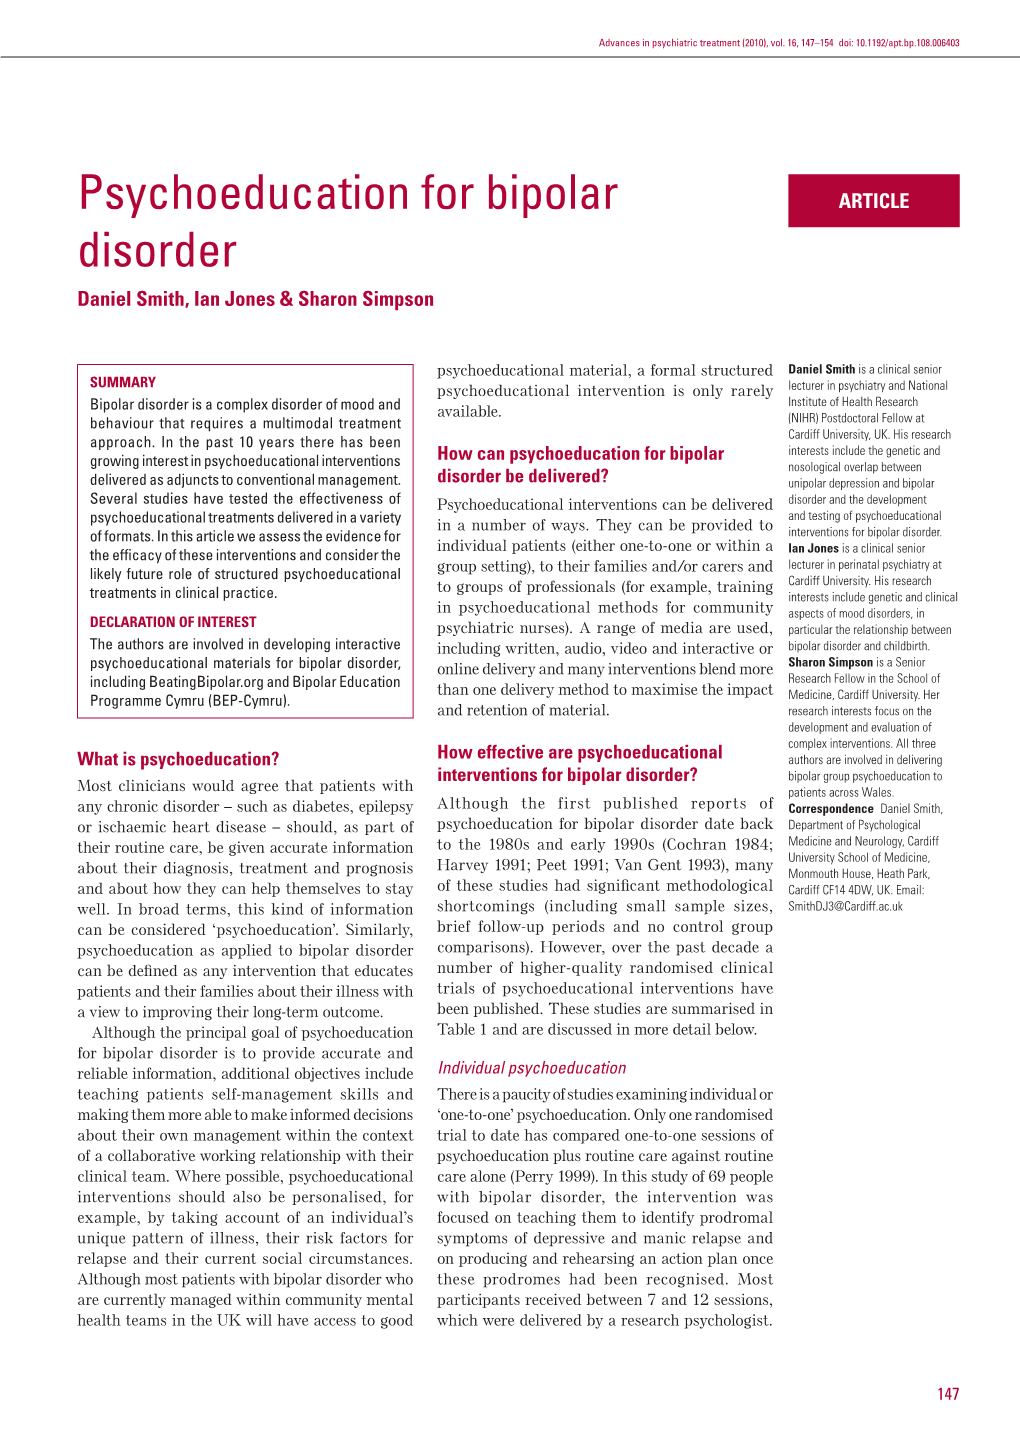 Psychoeducation for Bipolar Disorder